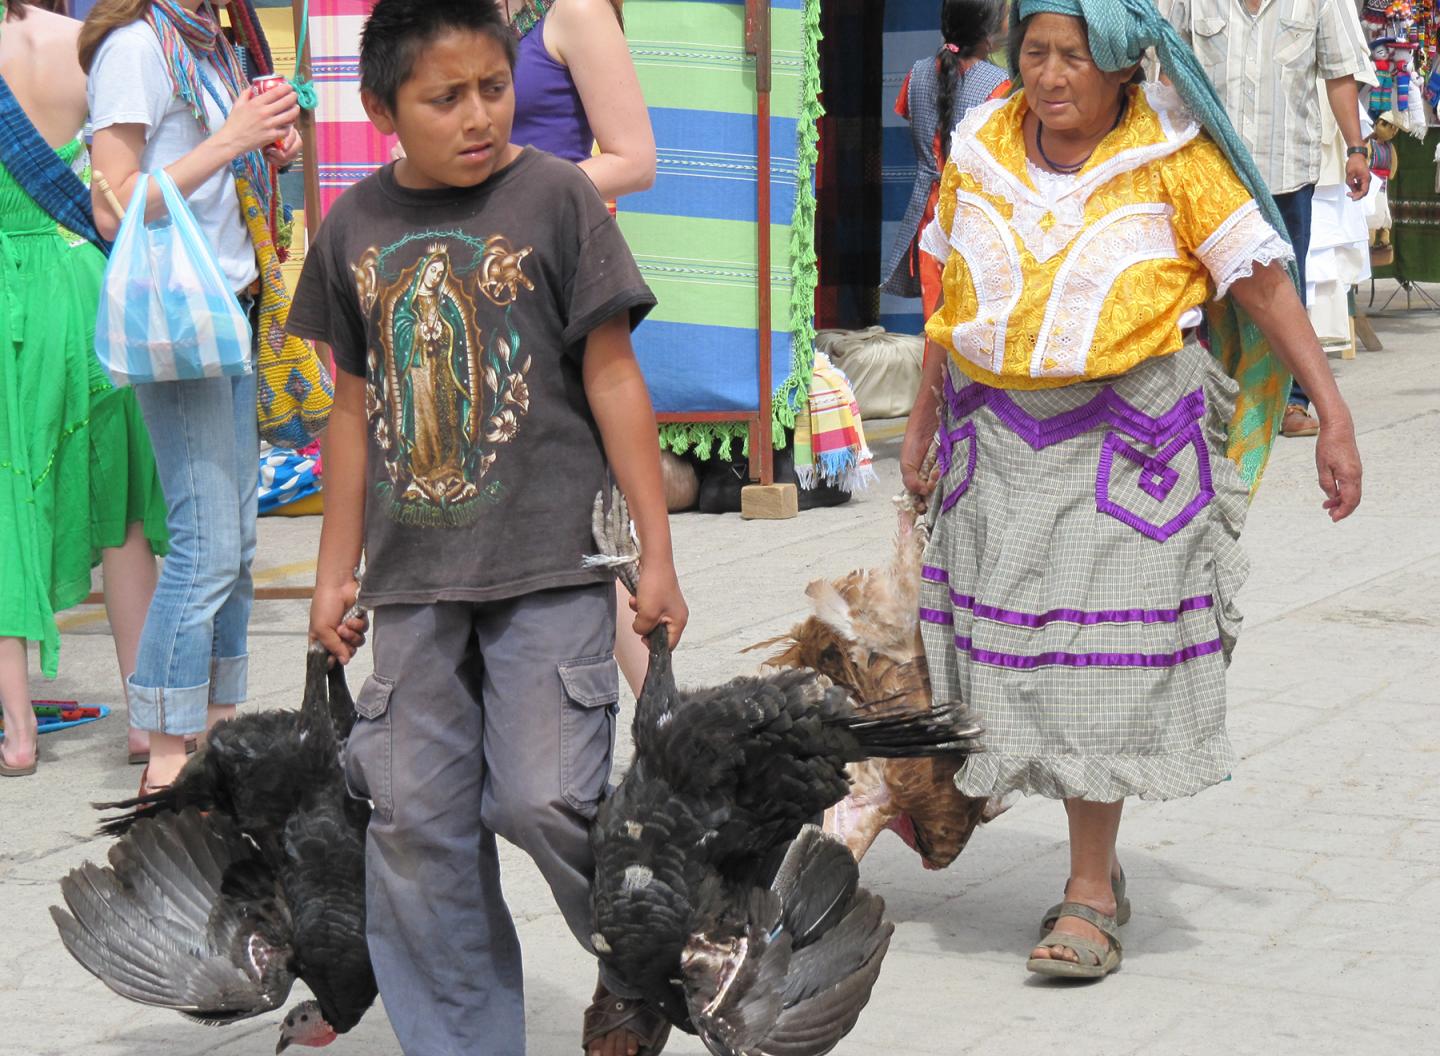 Boy with Turkeys in Oaxaca Today